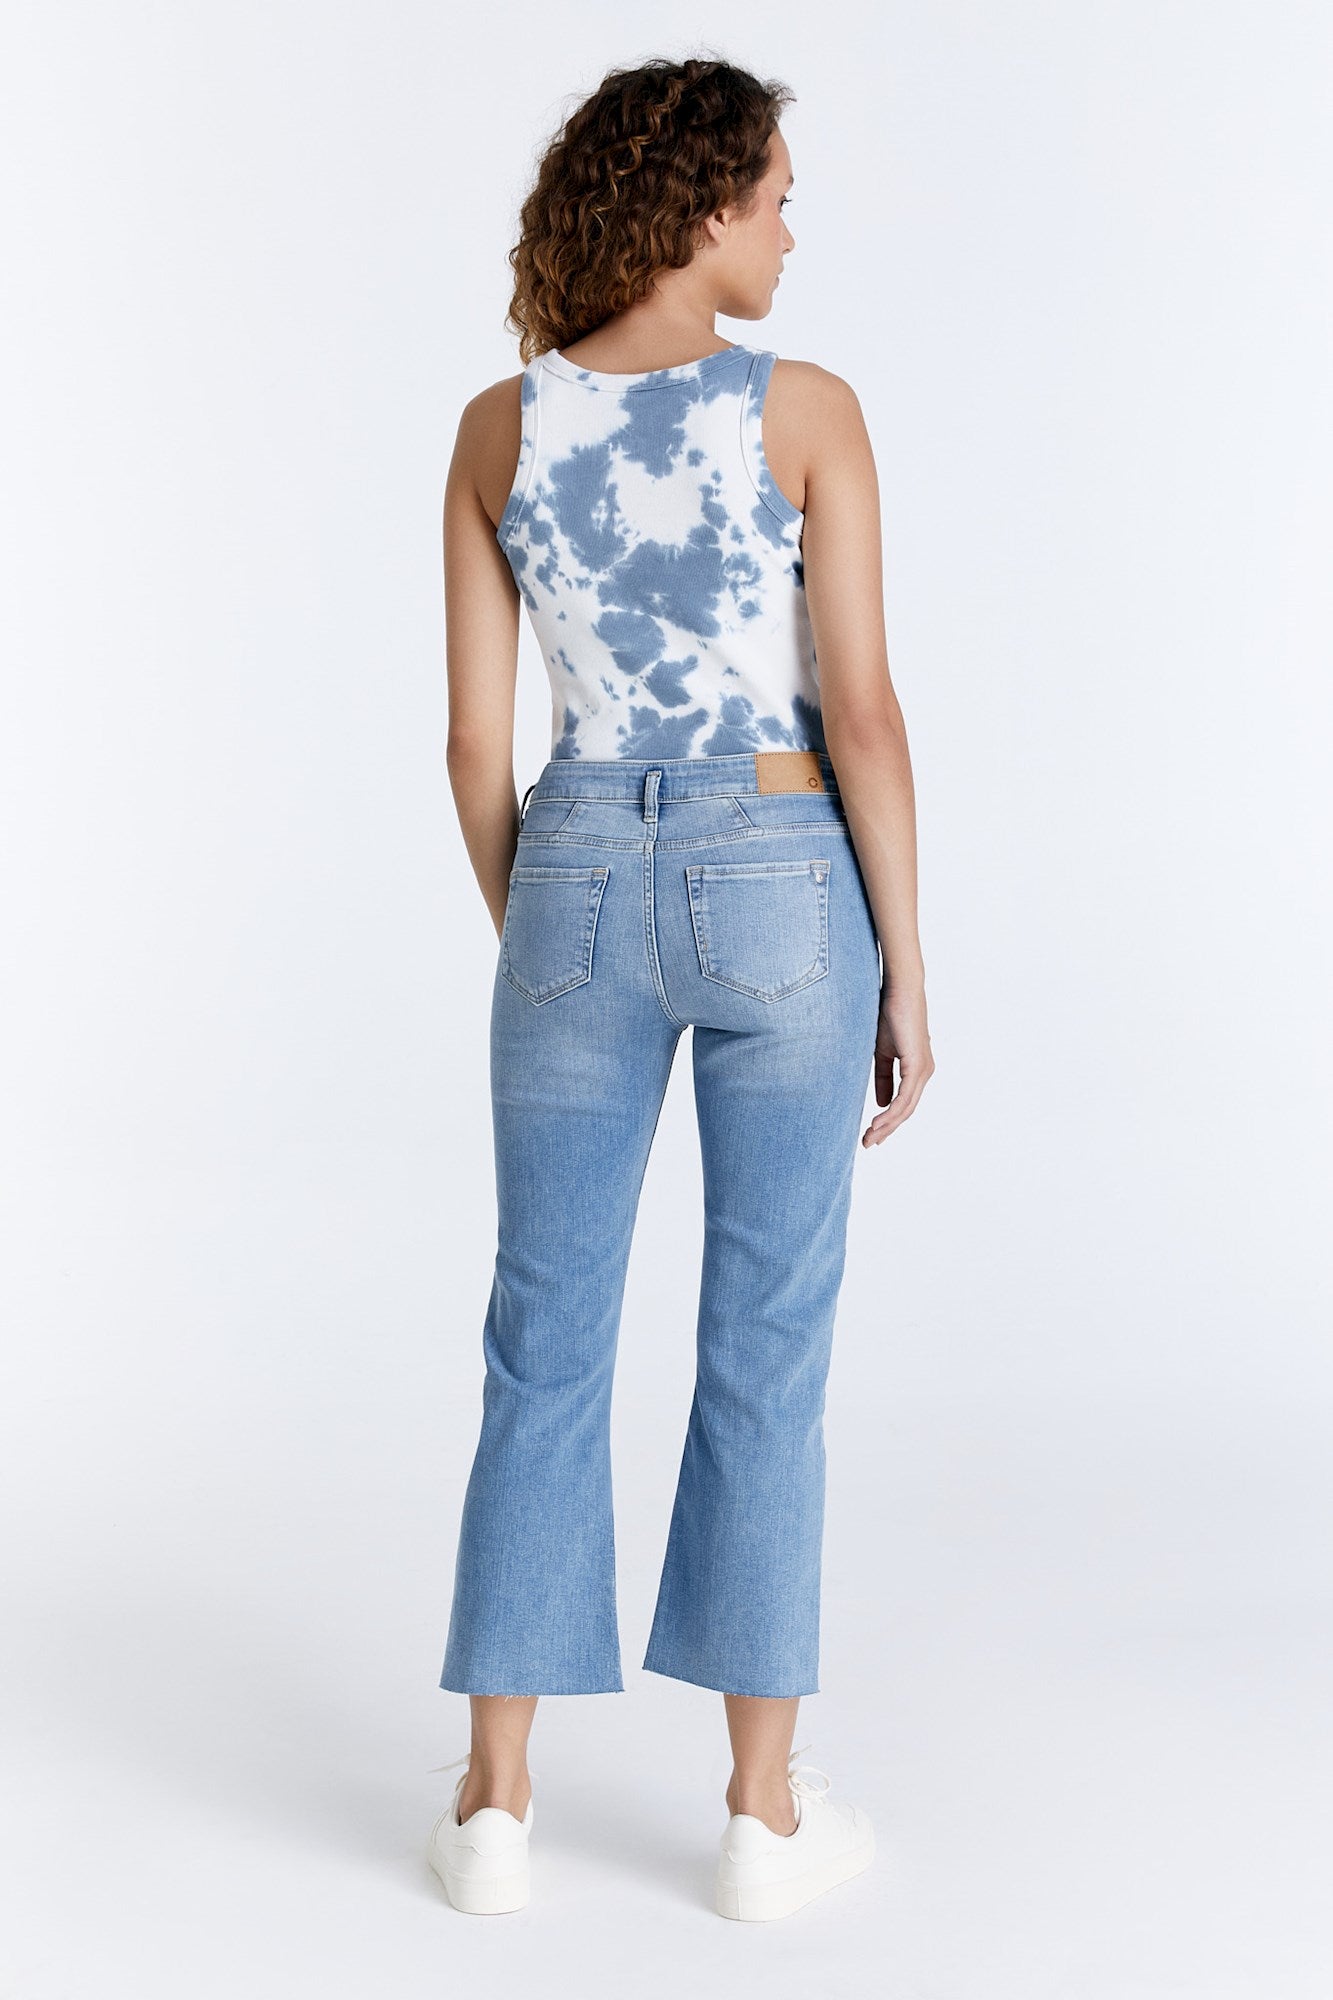 Irene – Kurz geschnittene Jeans mit mittlerer Taille – Hellblau